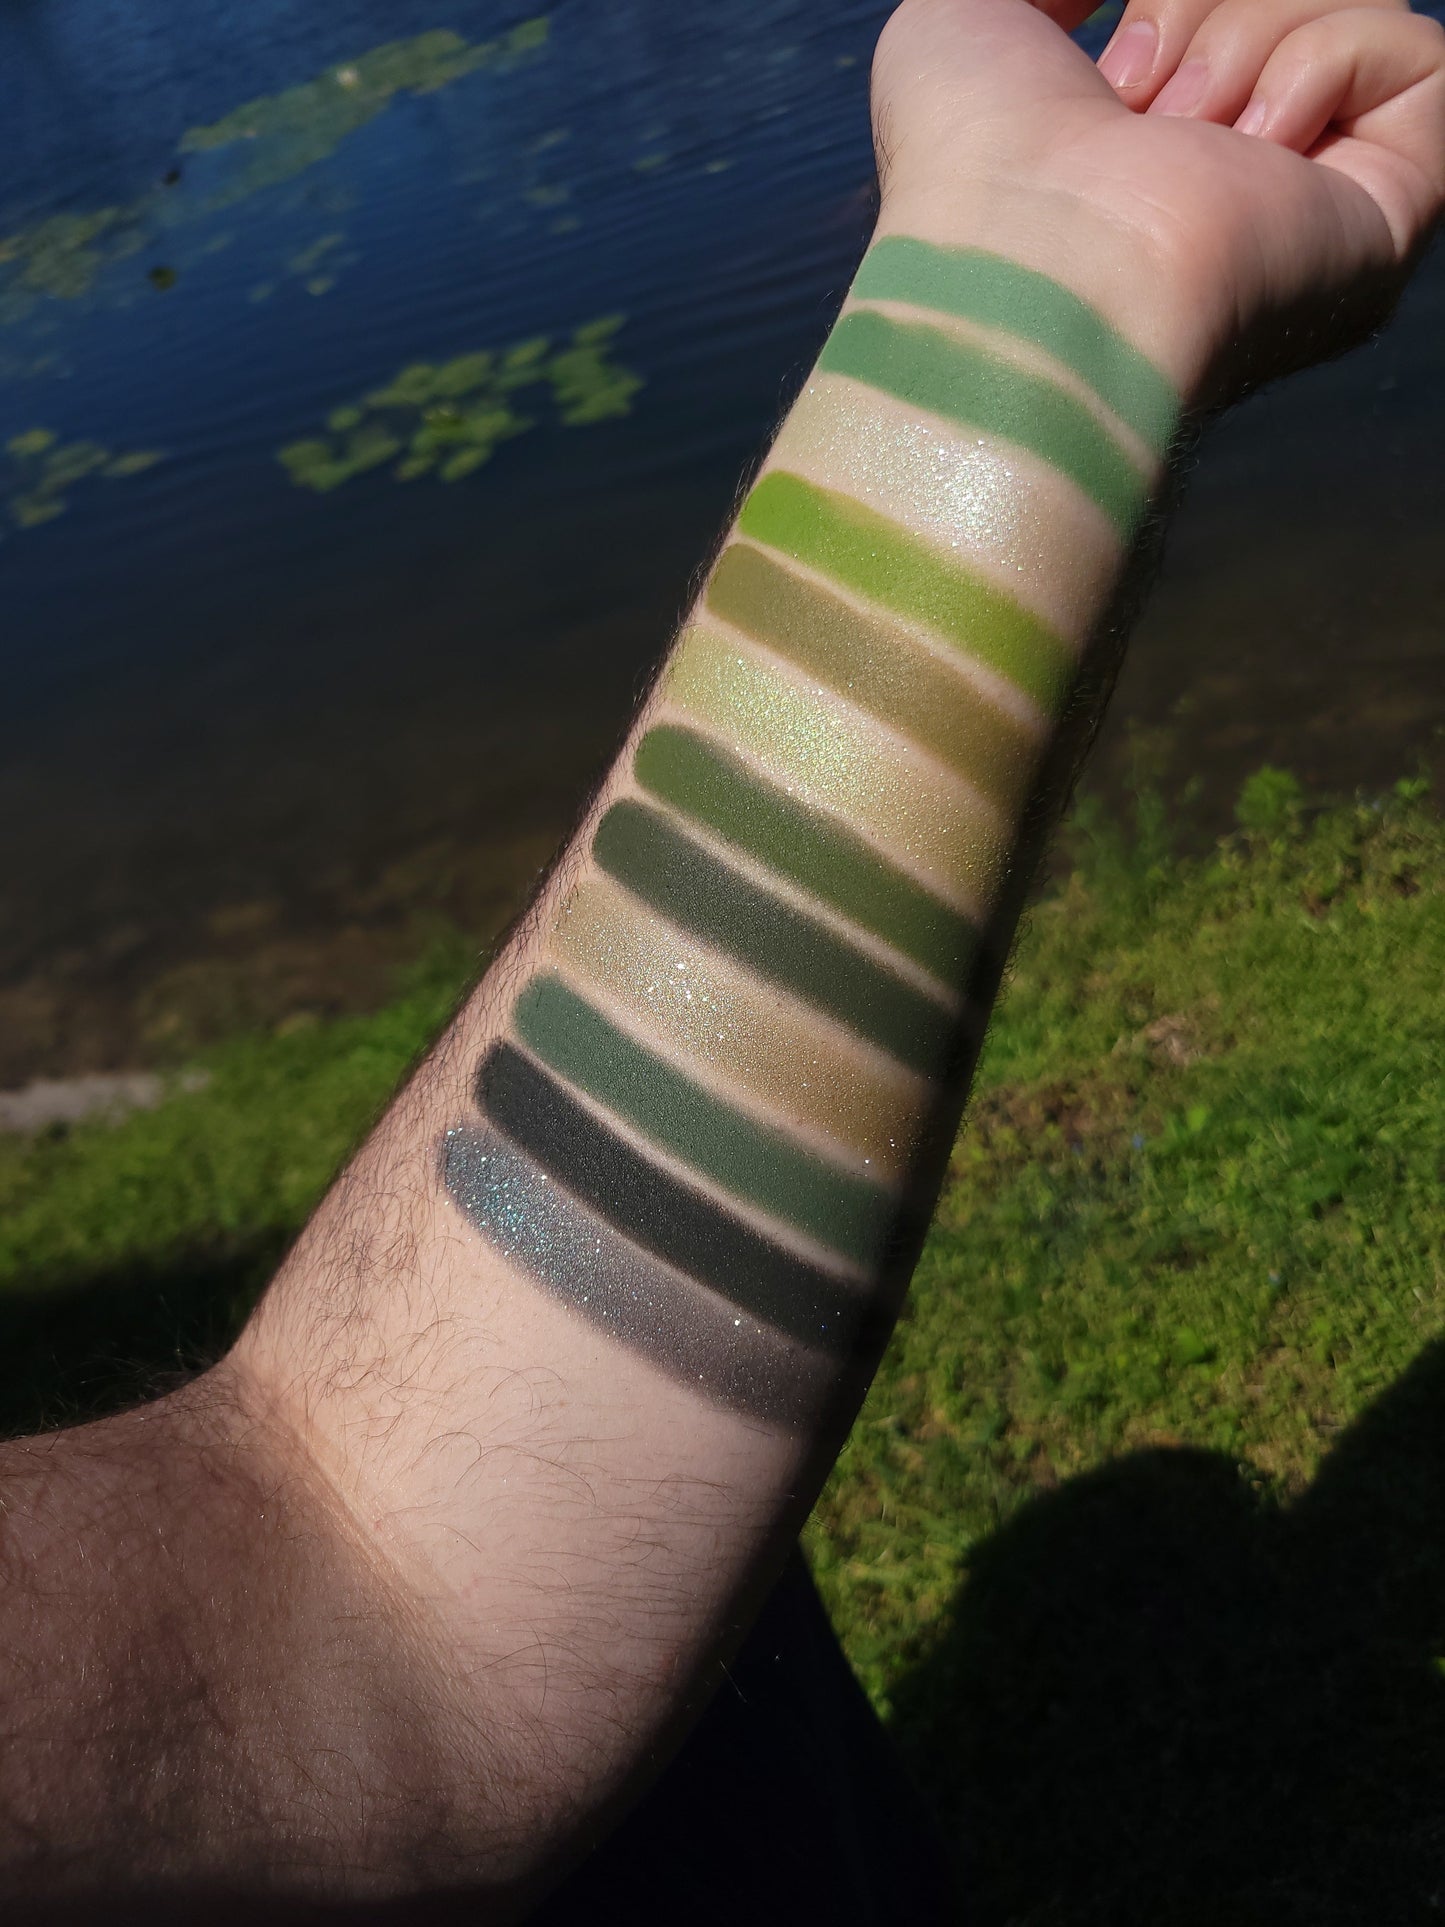 Dionaea - Eyeshadow Matte Yellow-Green